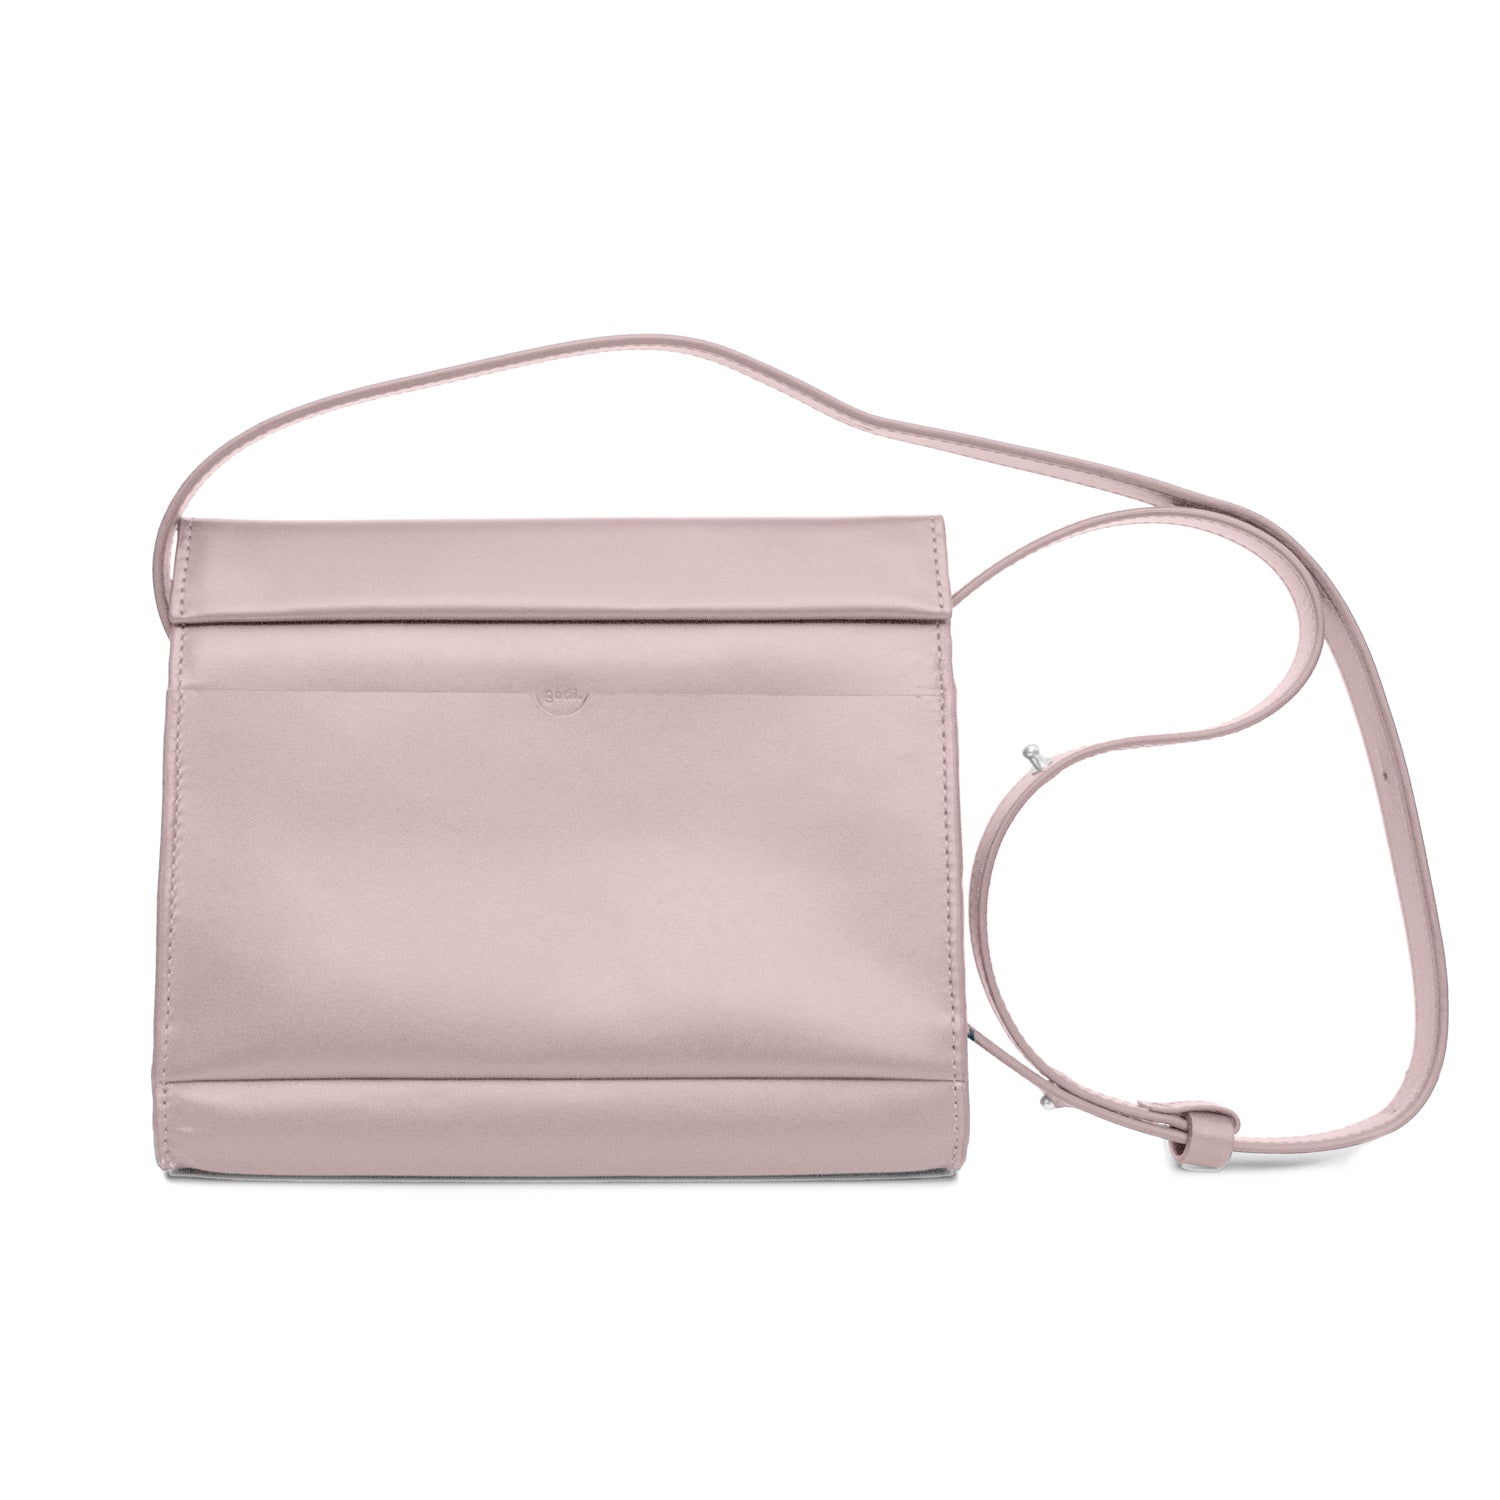 Mini Shoulder Bag in Nude Pink